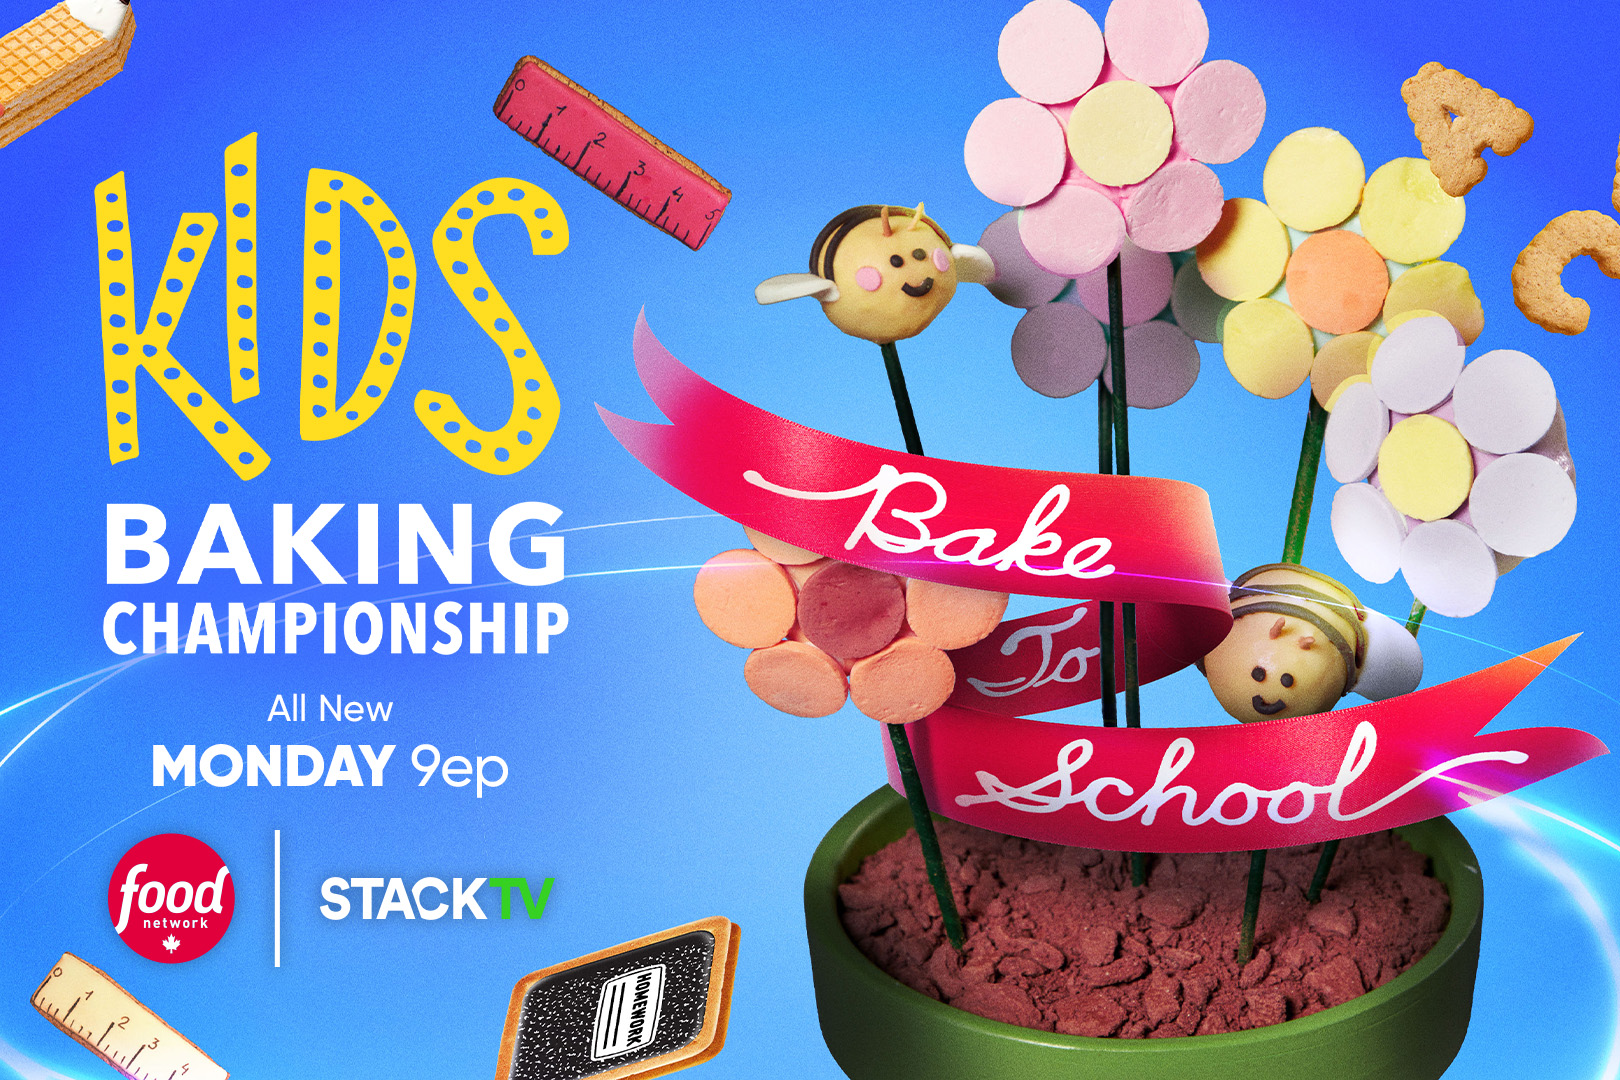 Kids Baking Championship – All New Mondays 9ep